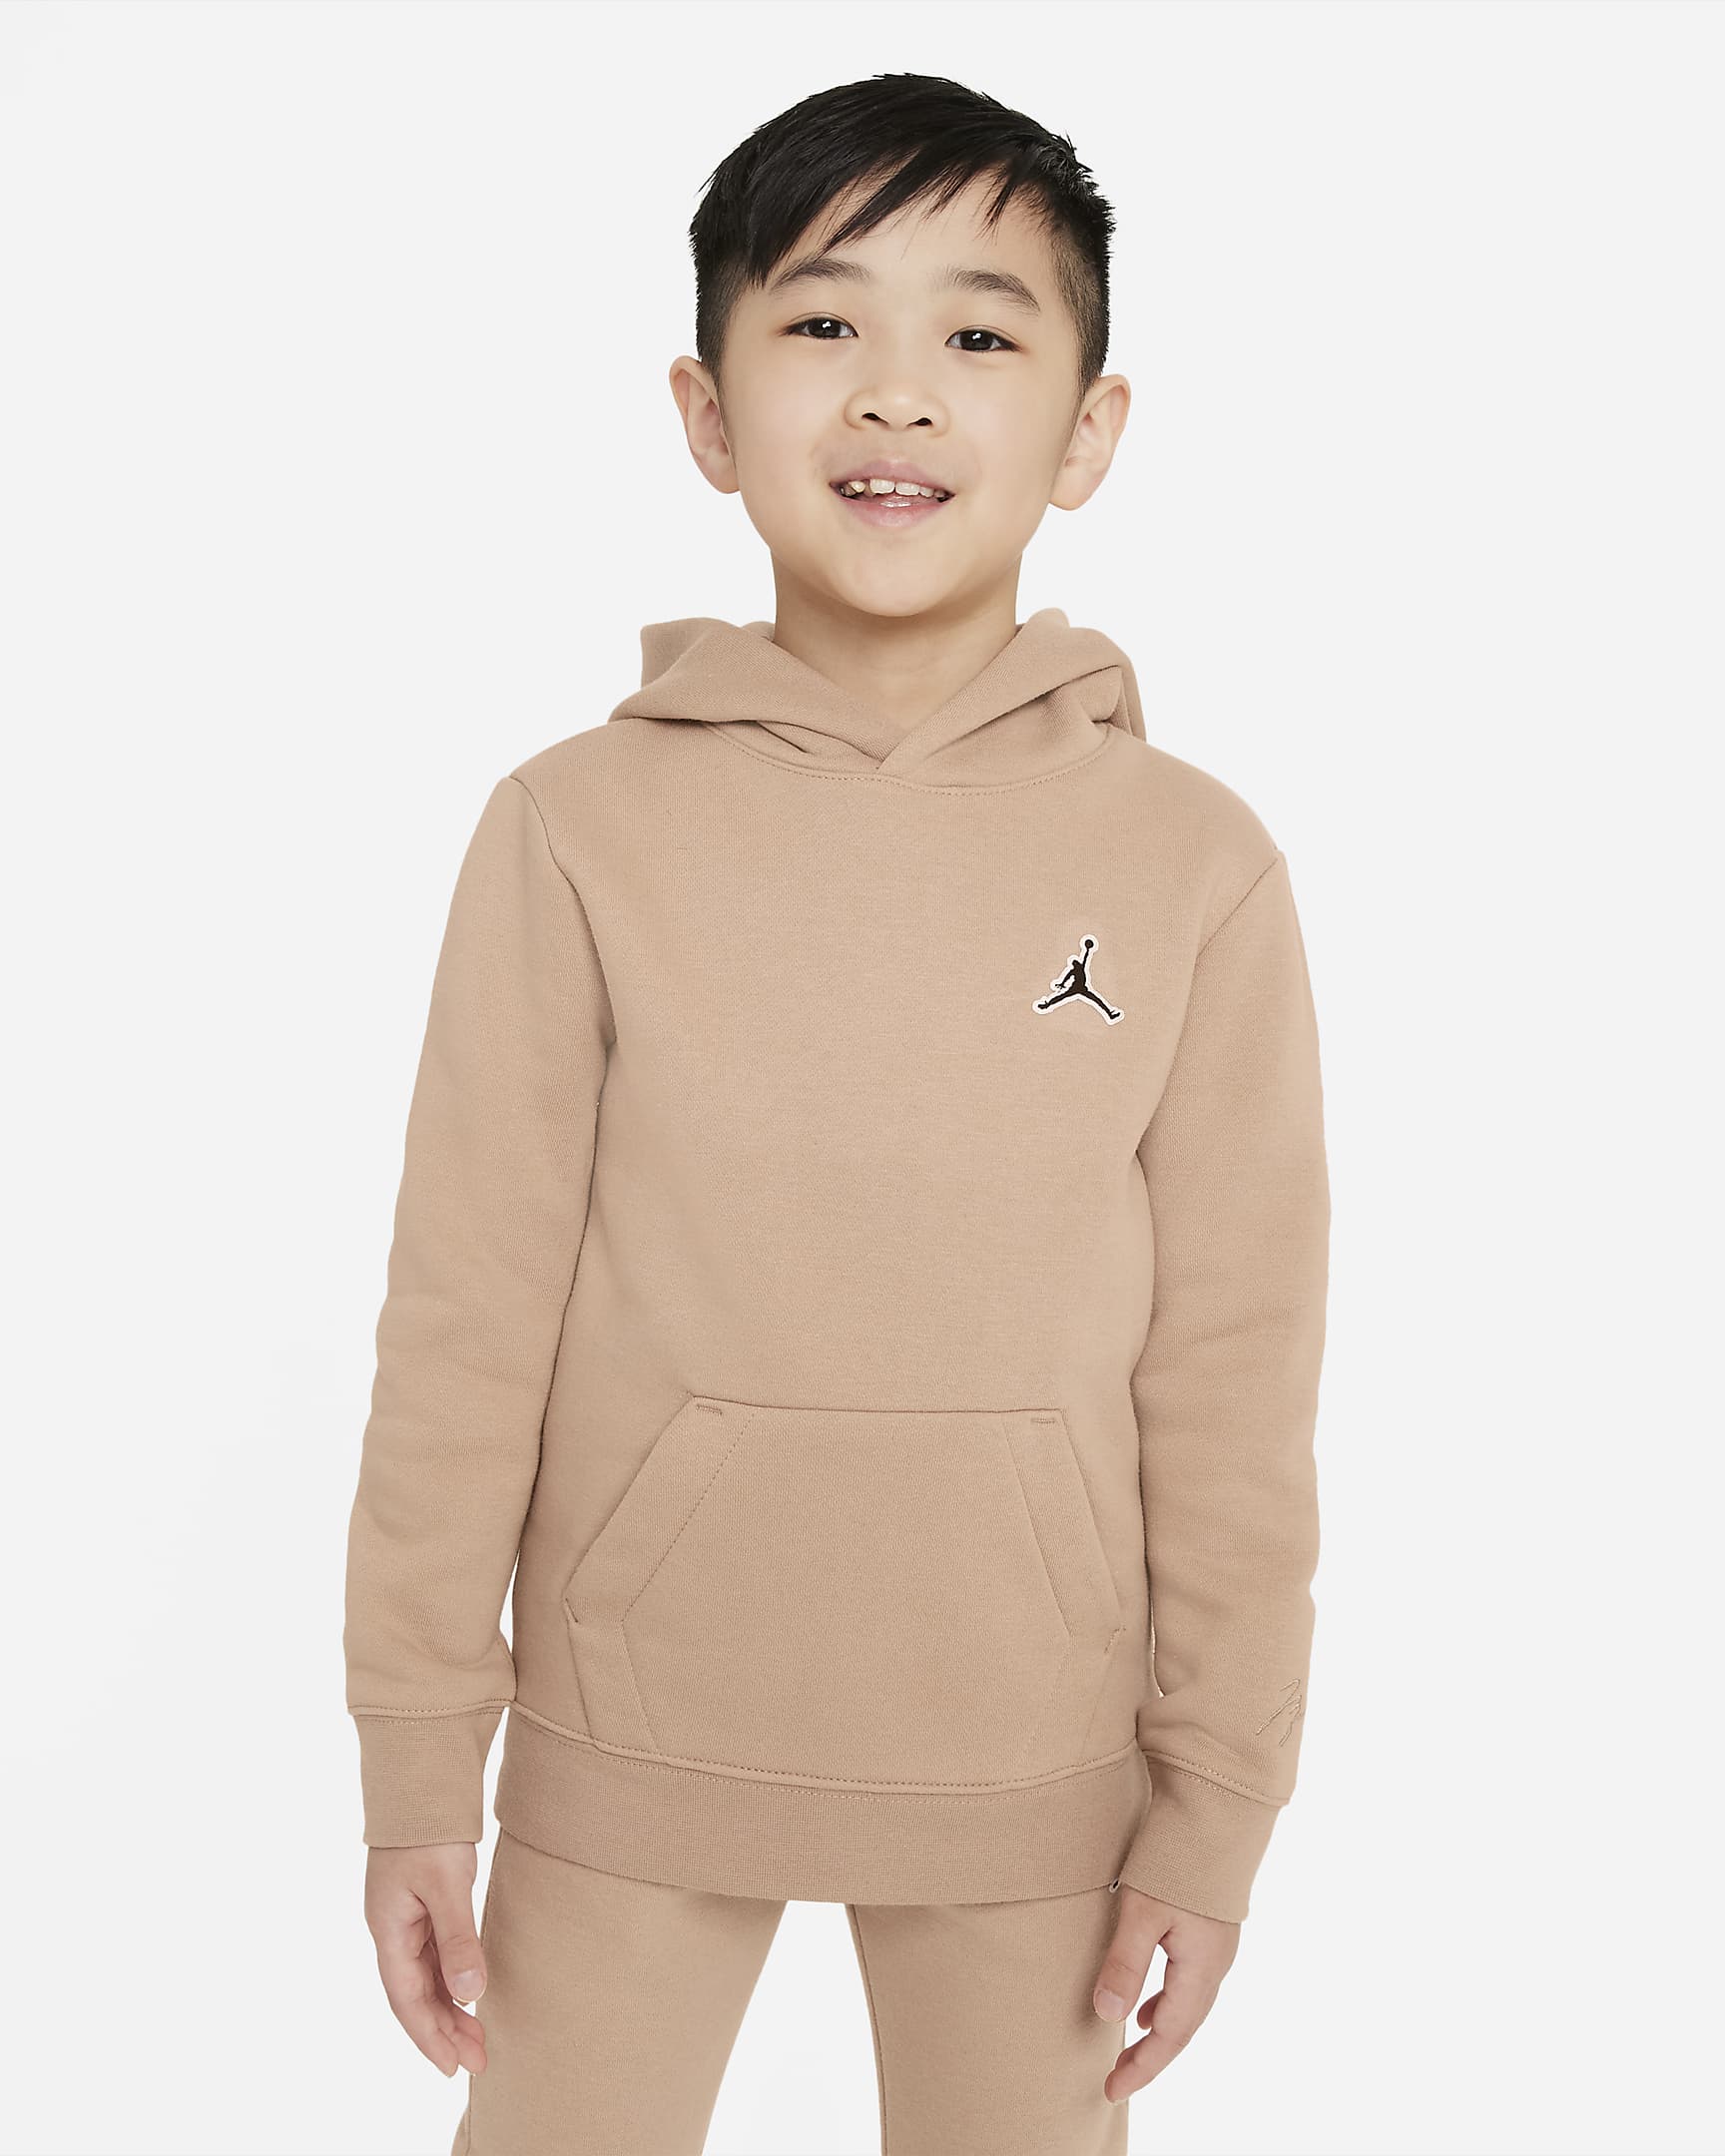 jordan-little-kids-pullover-hoodie-Zm3xVM.png